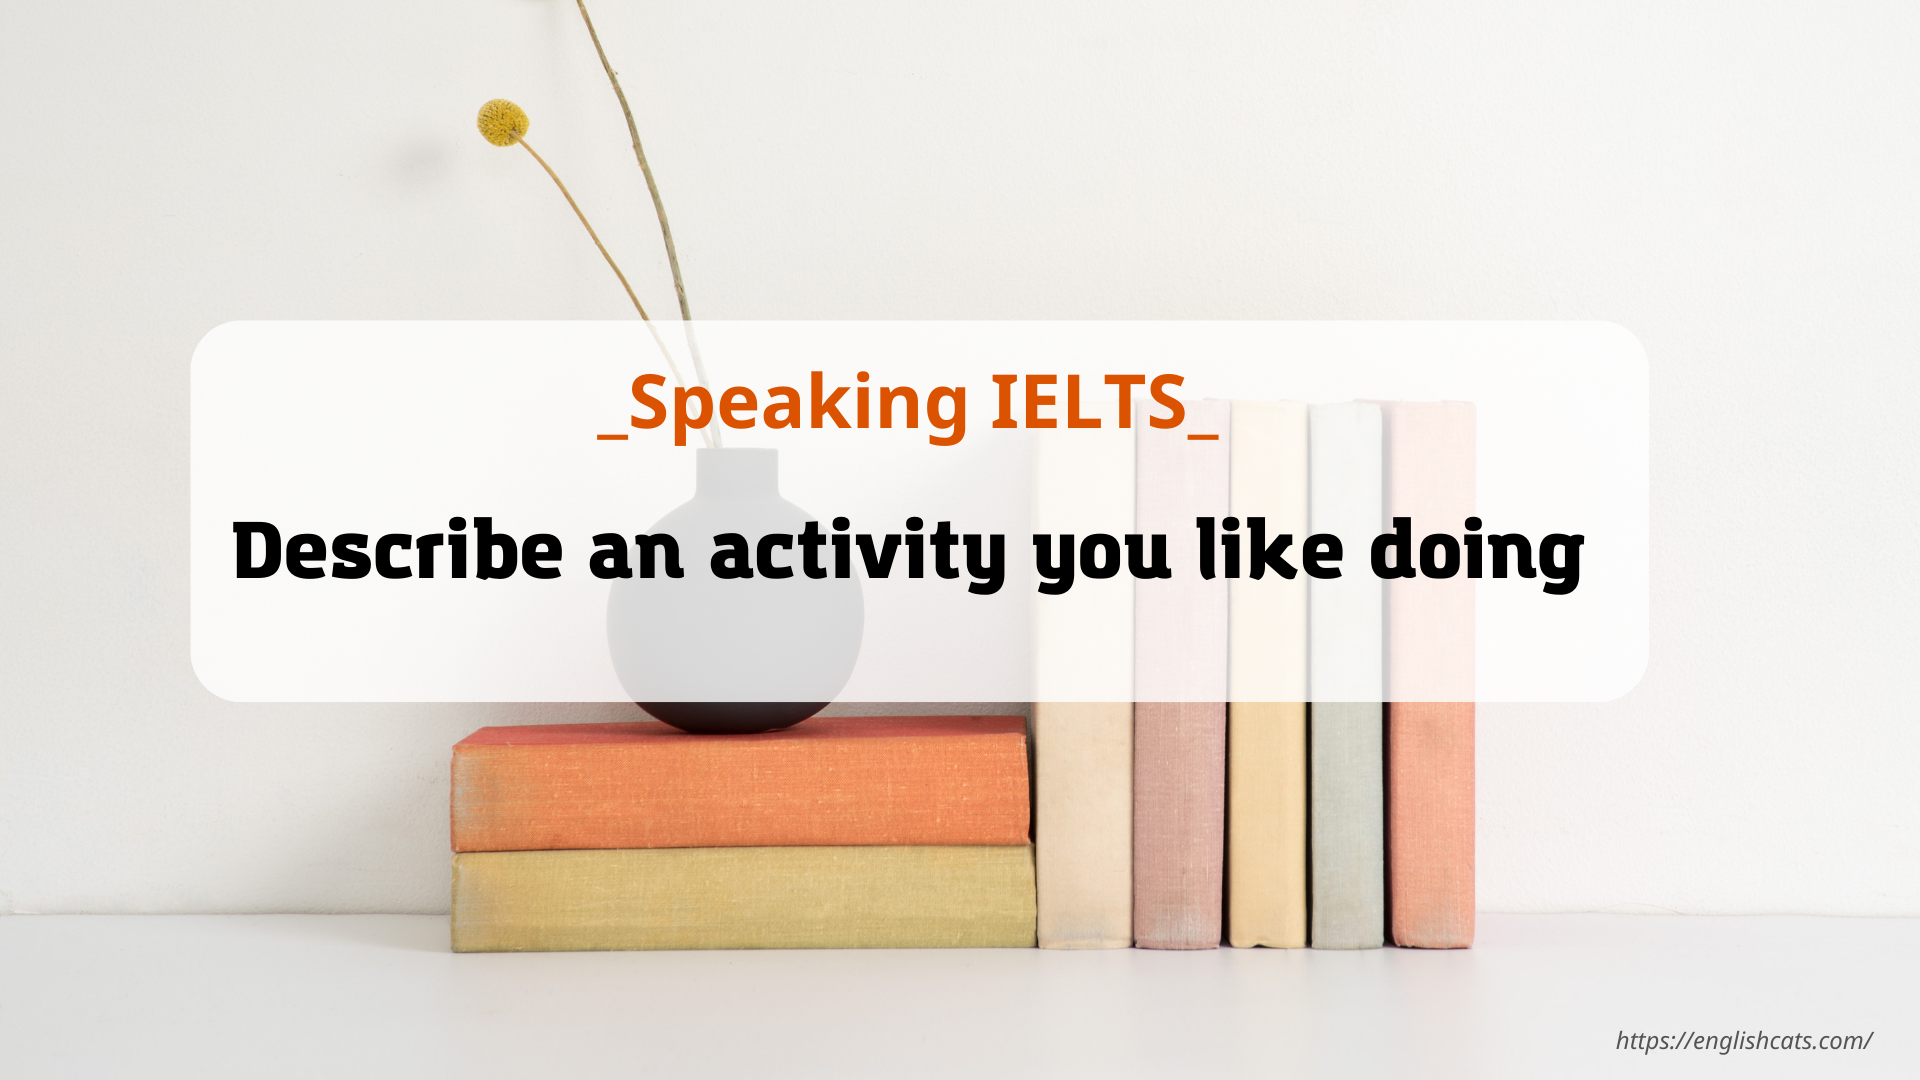 Bài nói decribe an activity you like doing